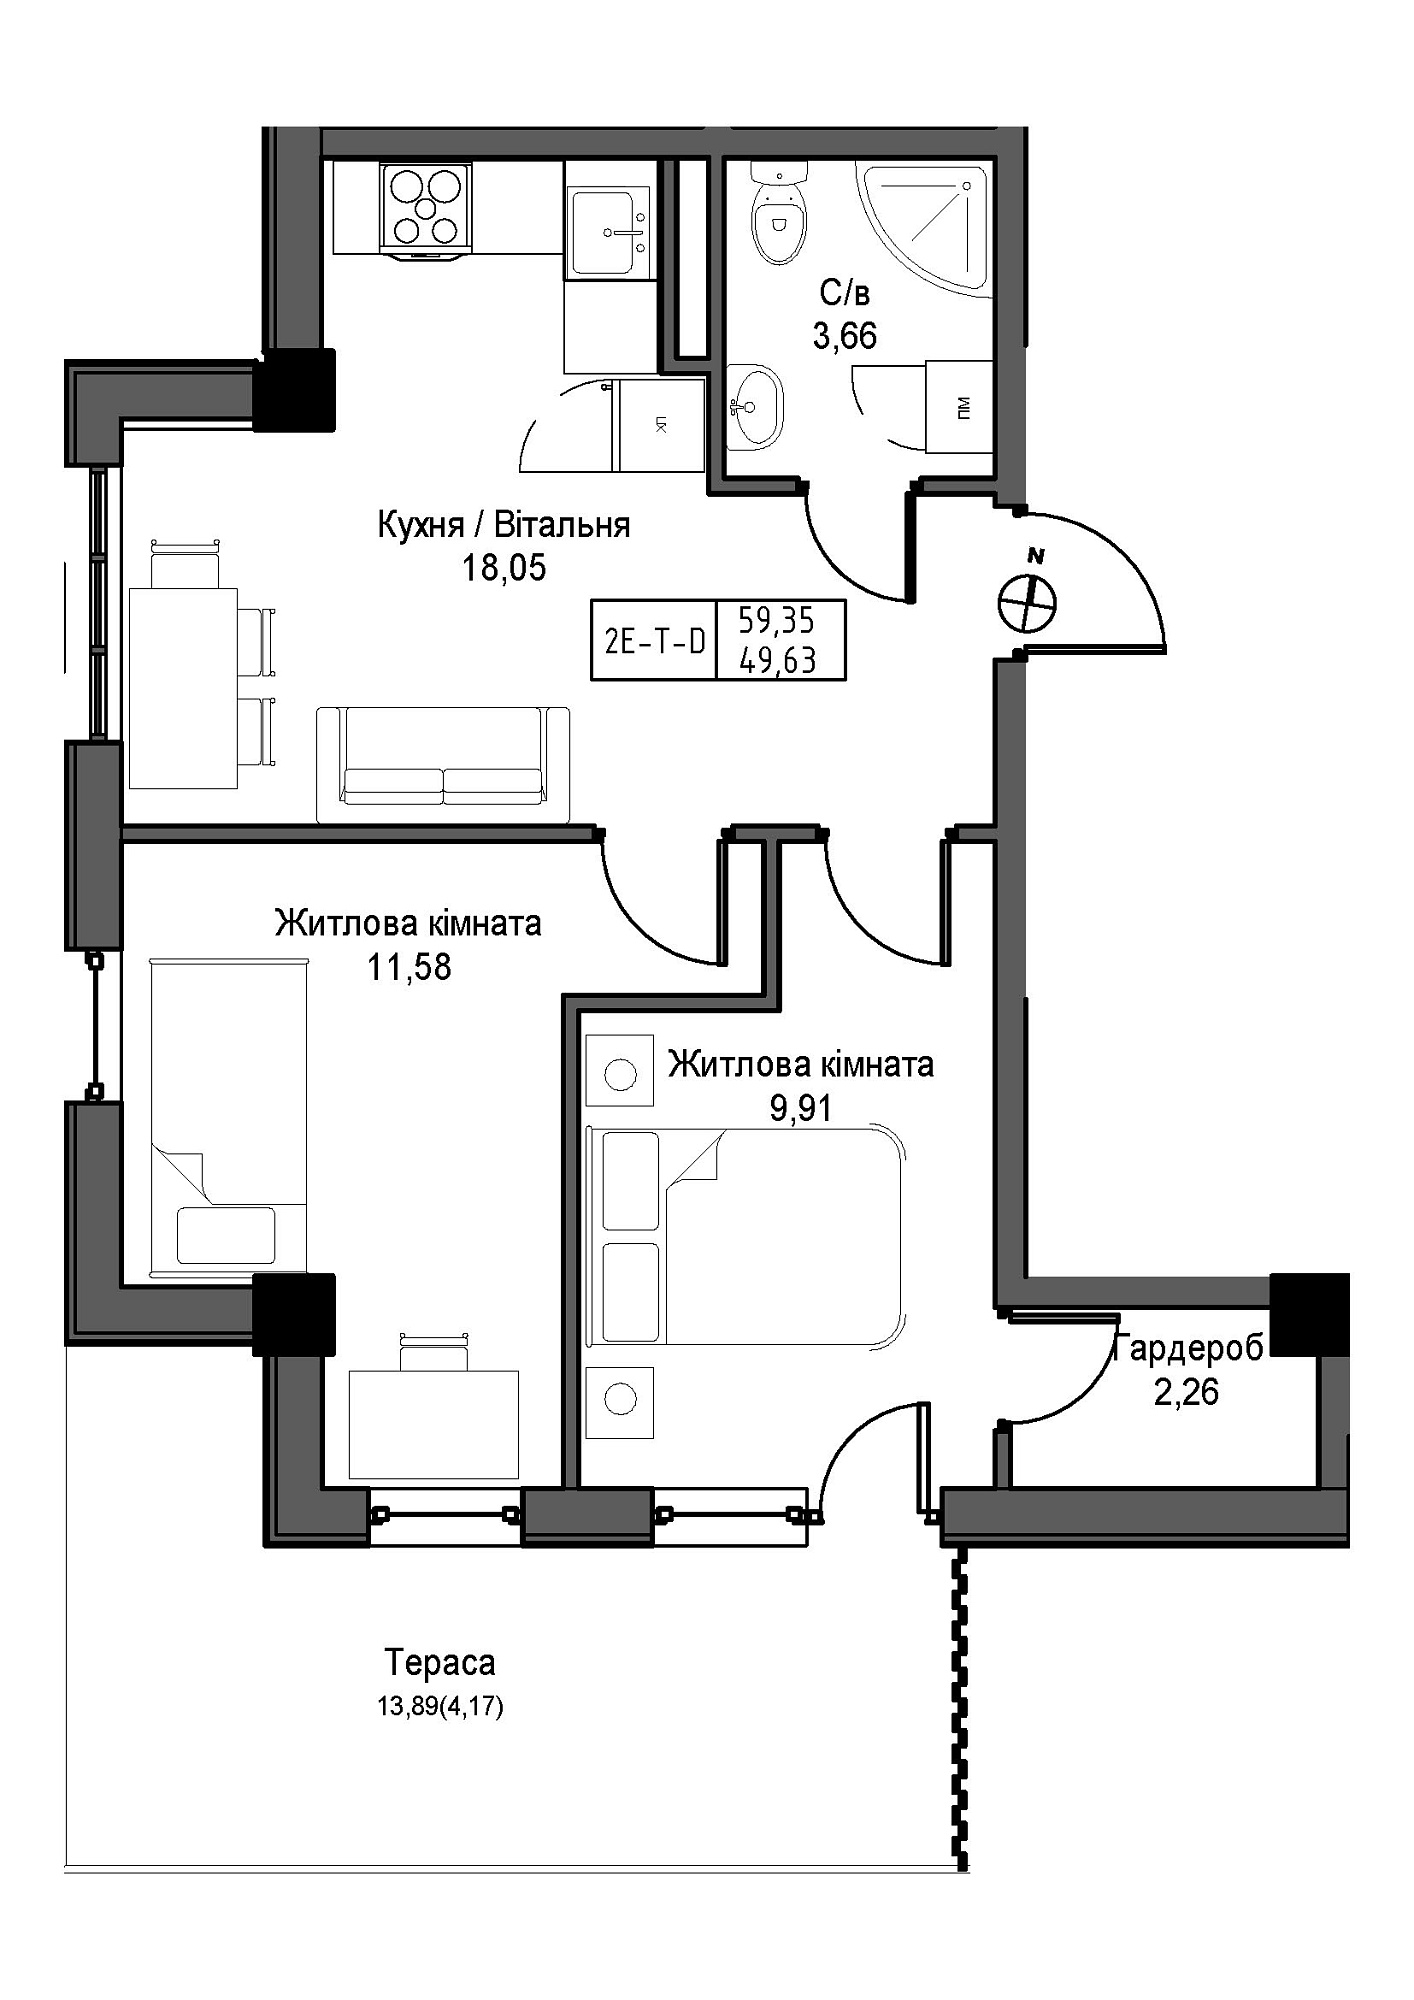 Планування 2-к квартира площею 49.63м2, UM-007-08/0011.